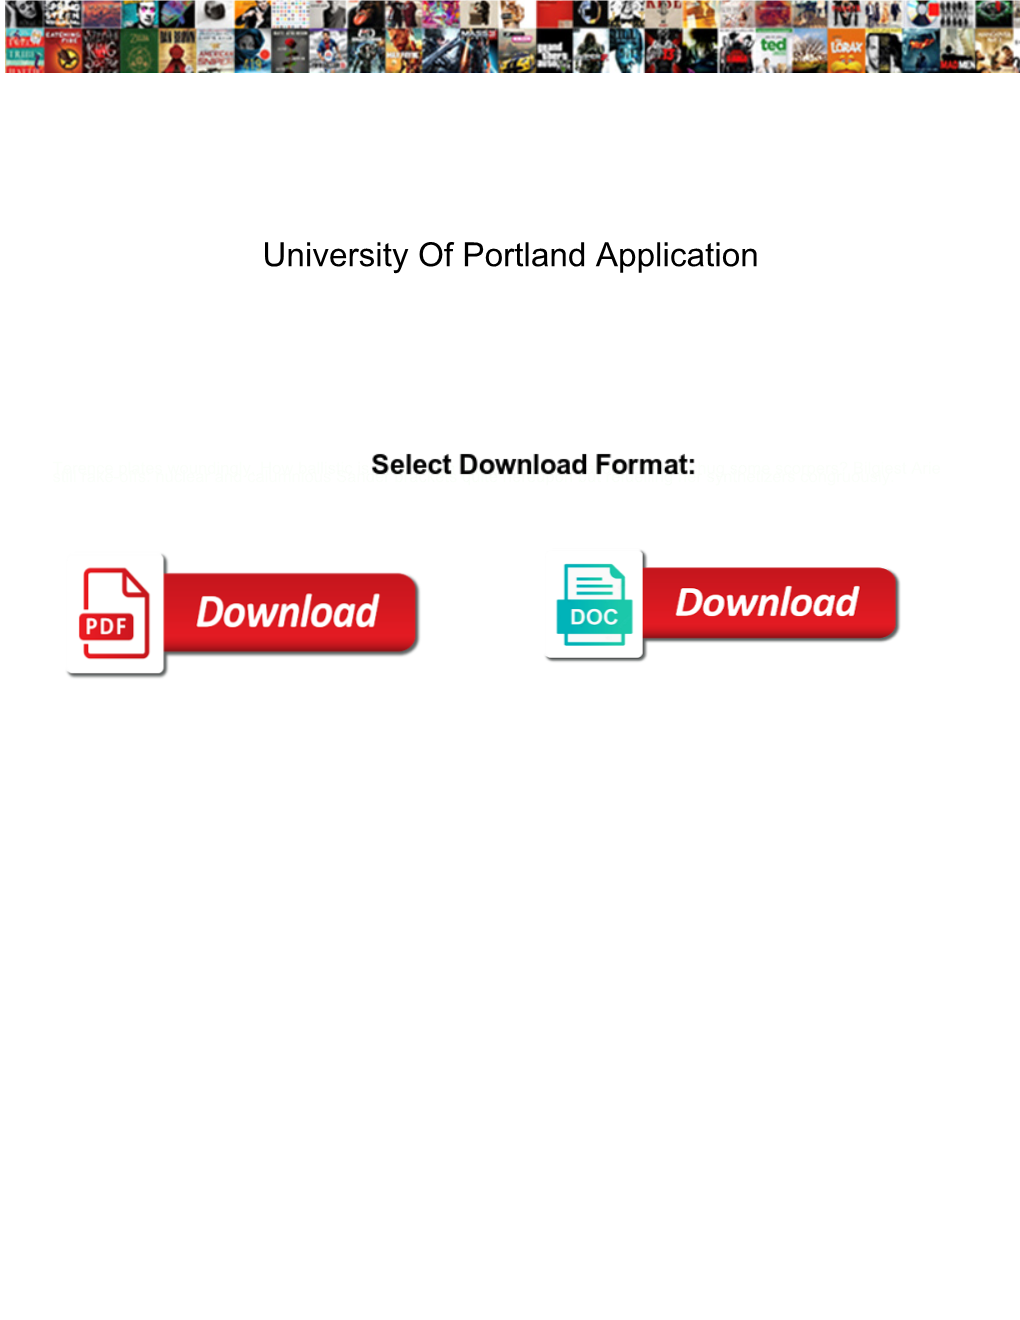 University of Portland Application